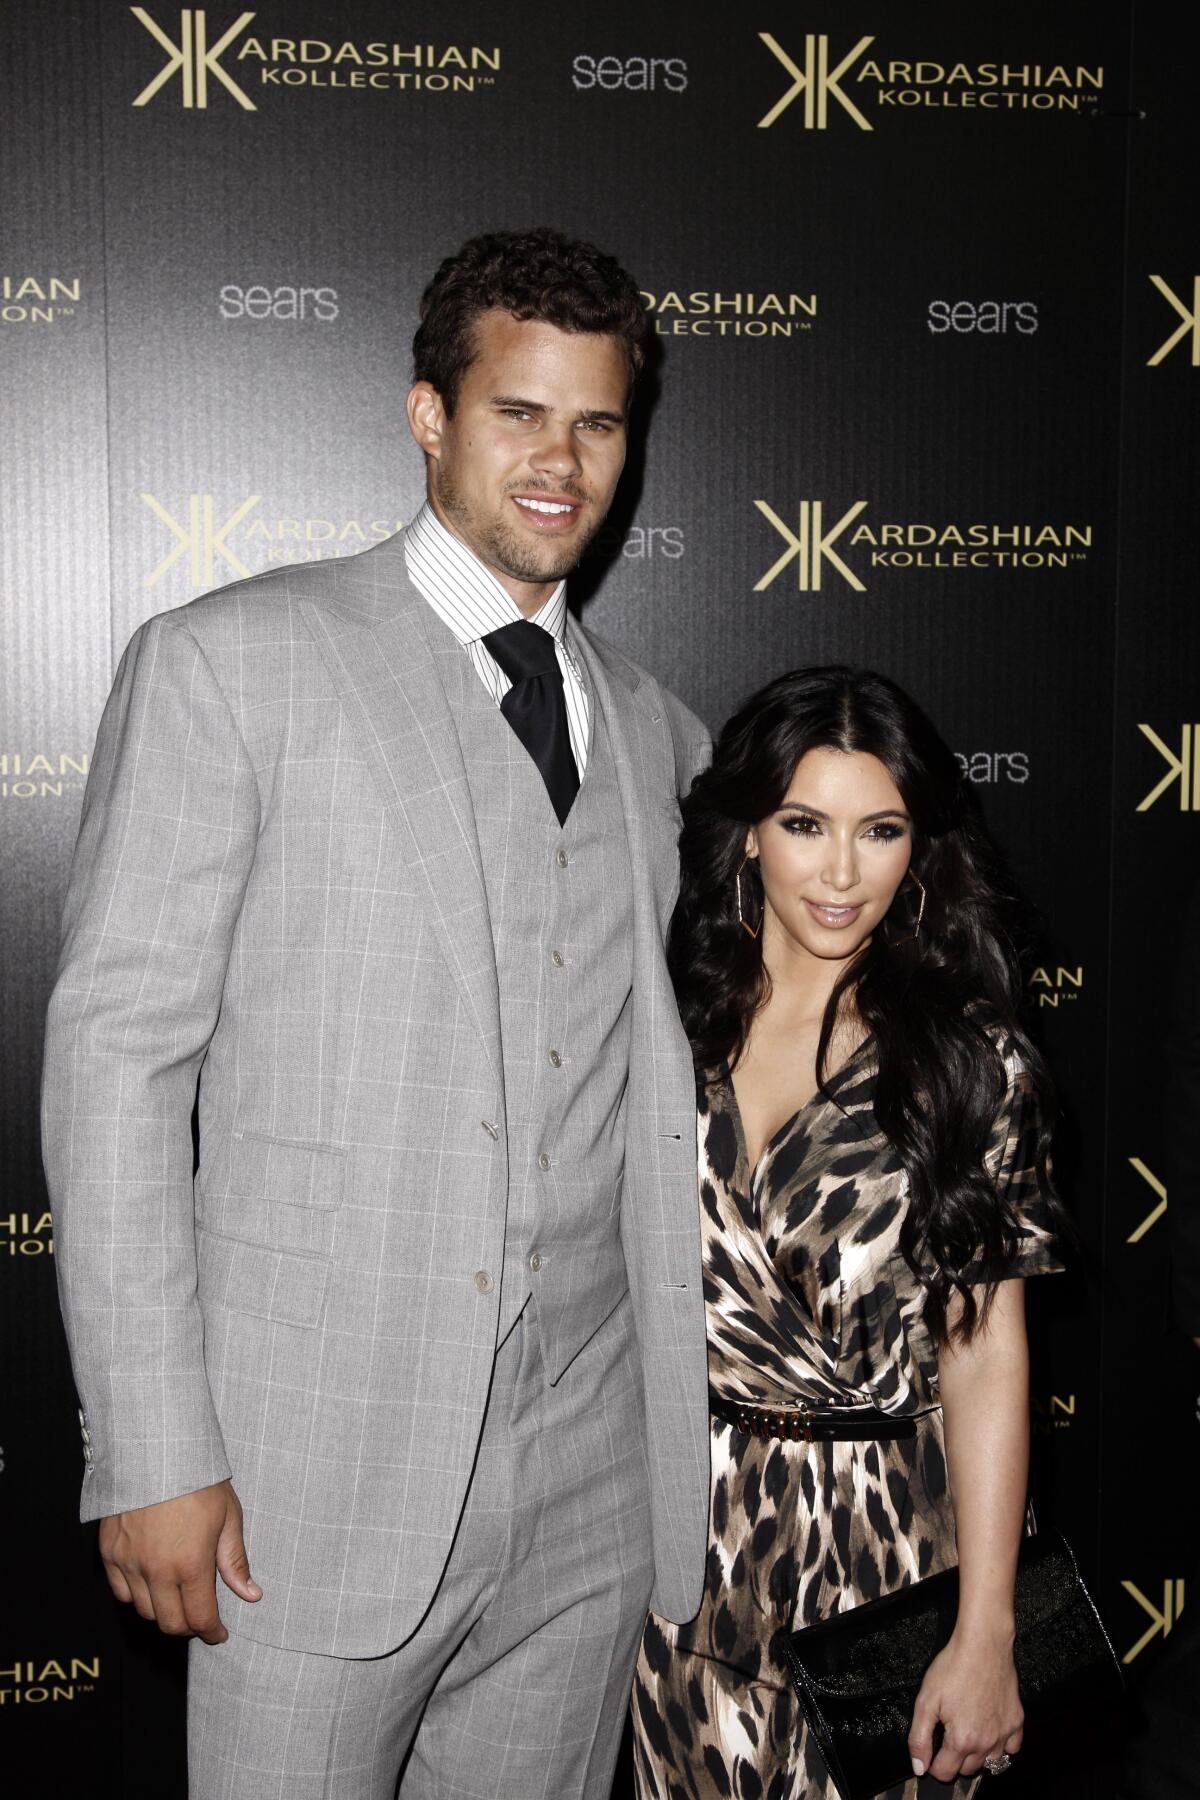 Kim Kardashian and NBA player Kris Humphries